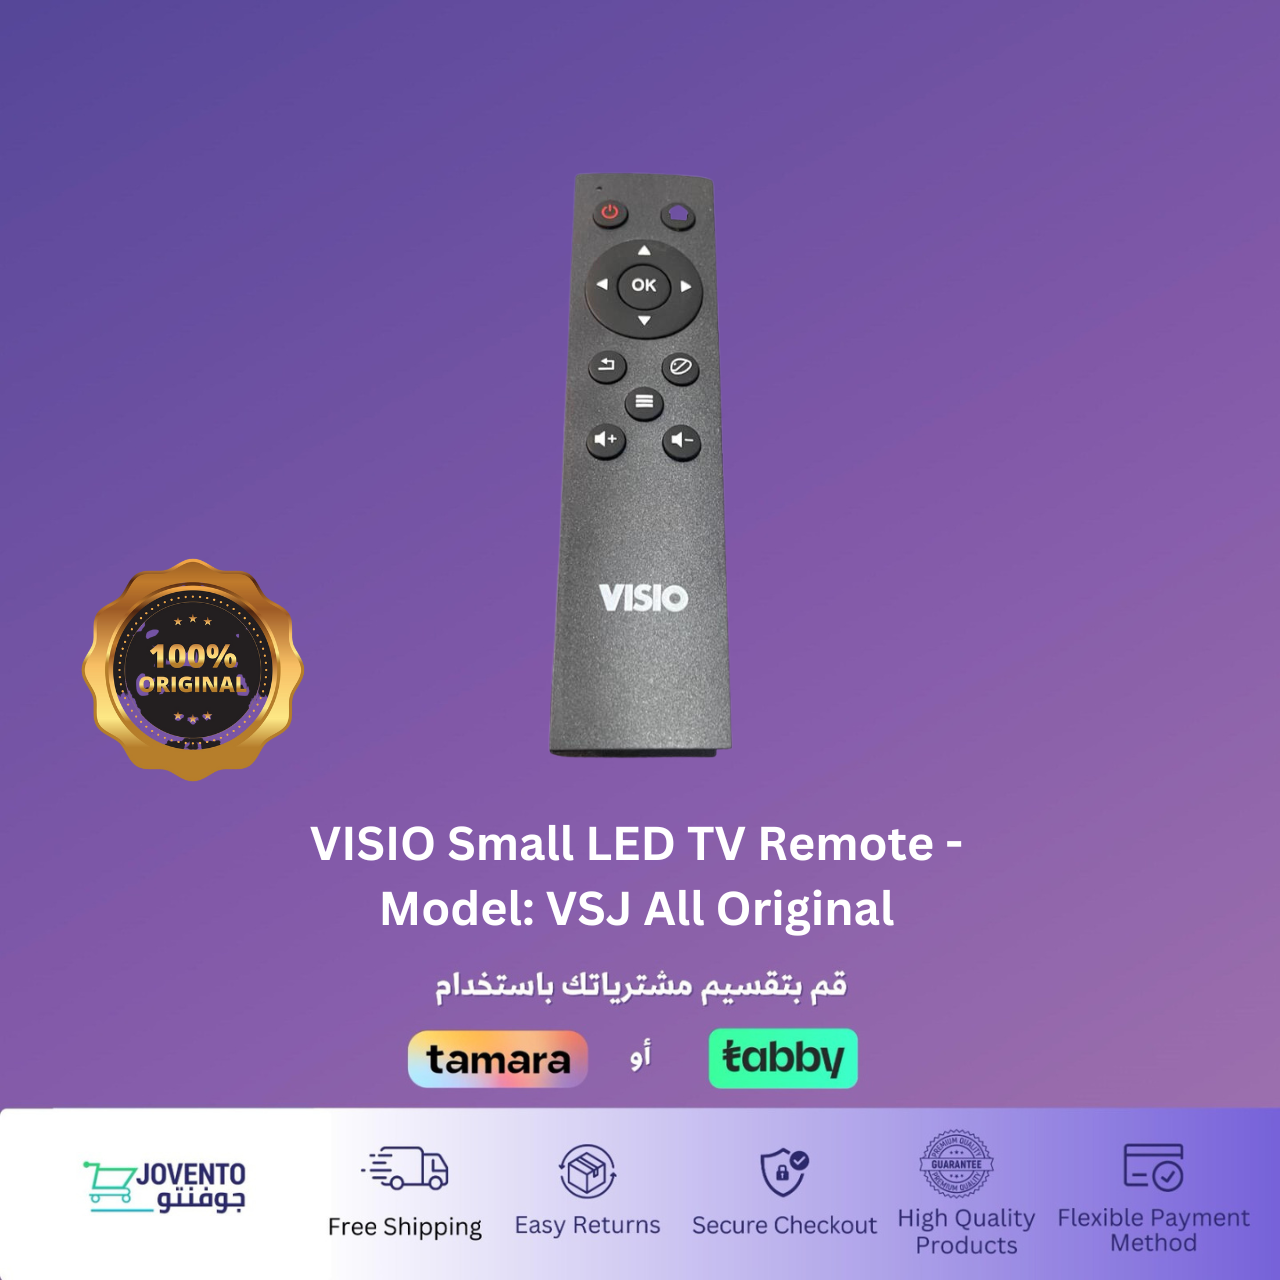 VISIO Small LED TV Remote - Model: VSJ All Original